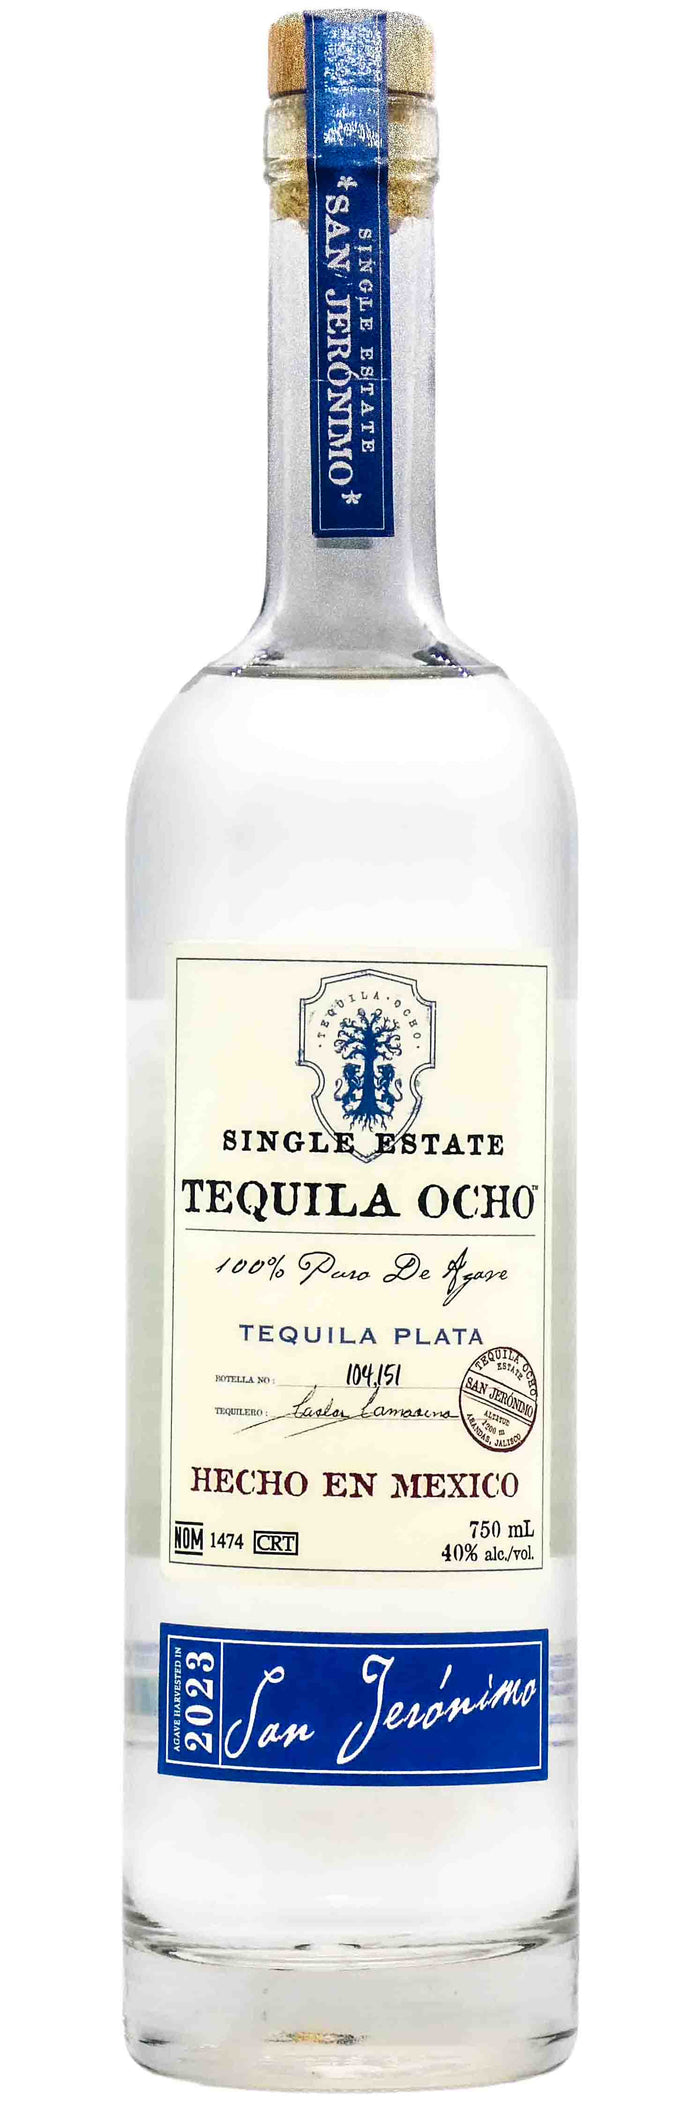 Tequila Ocho Plata "San Jeronimo"